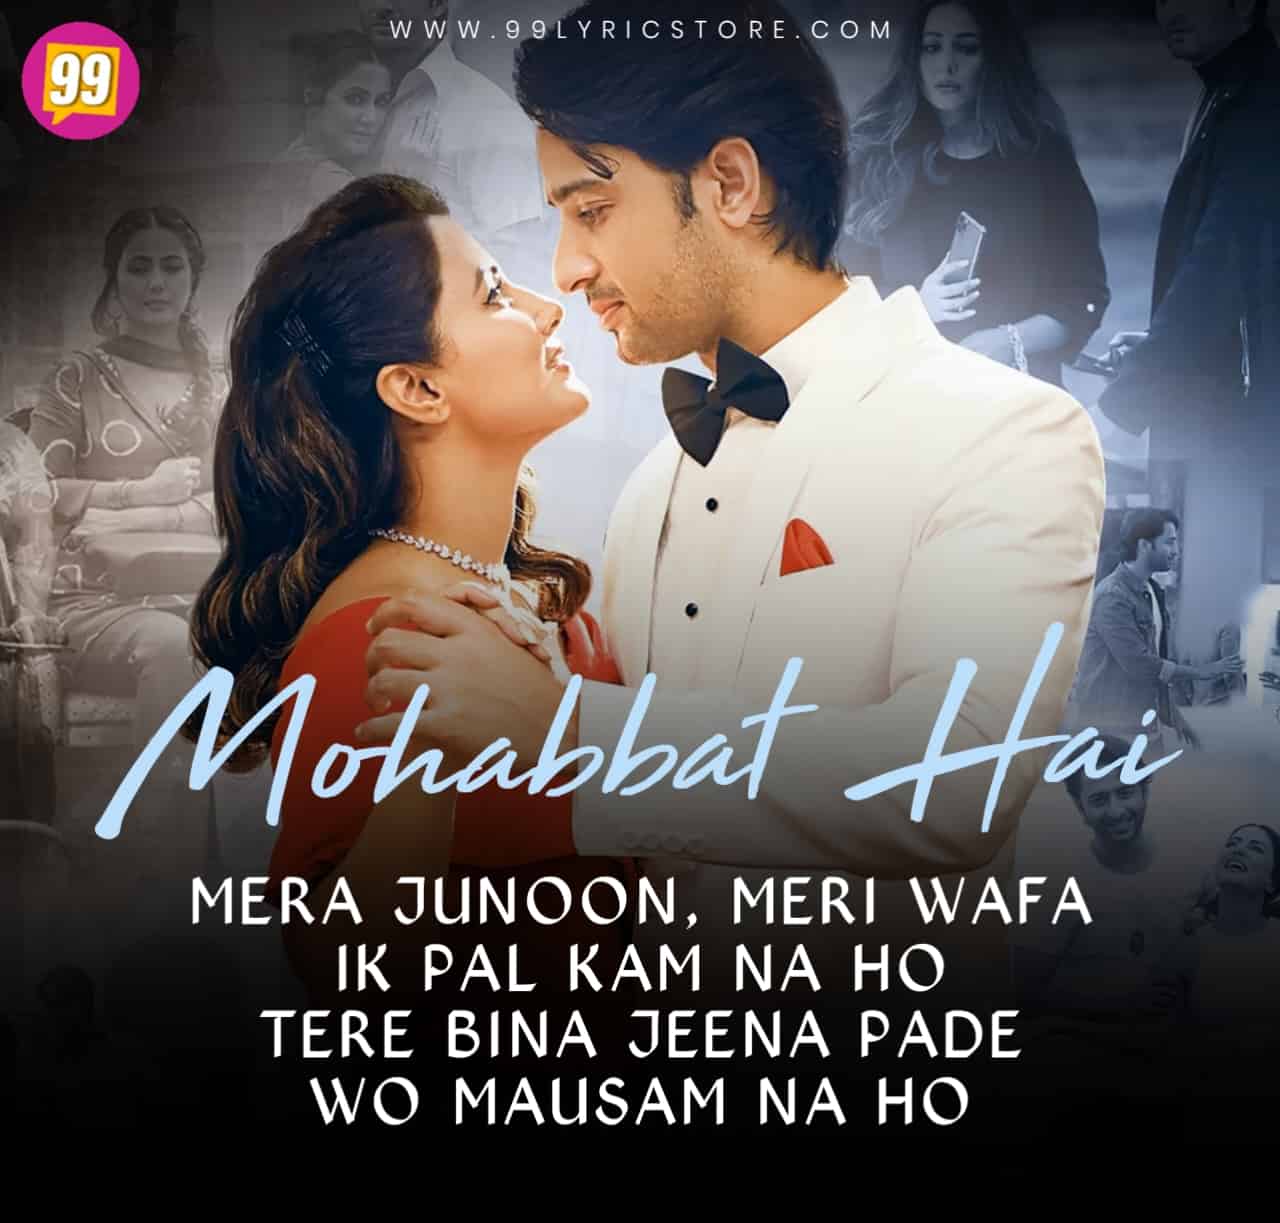 Mohabbat Hai Song Image Features Hina Khan And Shaheer Shaikh